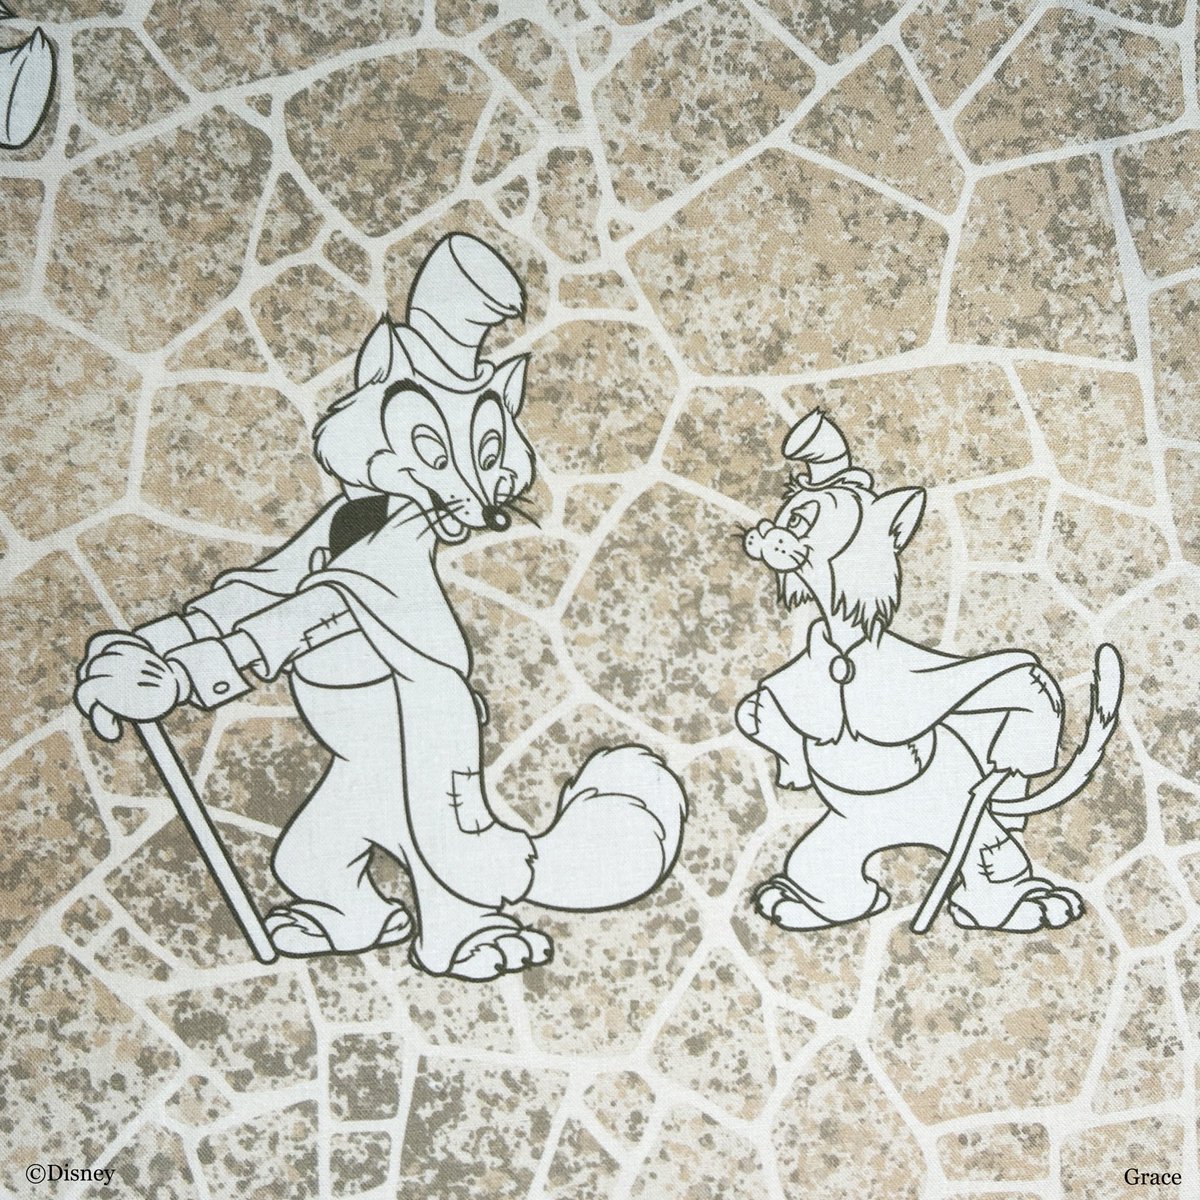 【<Disney>Scarf】
-Foulfellow&Gideon-

『ピノキオ』のファウルフェローとギデオンがレイアウトされたスカーフ❗️
石畳の道とレンガの壁をイメージした背景とセピアなカラーで、まるでレトロアニメーションを覗いているよう🎵

#ディズニー #Disney #ピノキオ #ファウルフェロー #ギデオン 